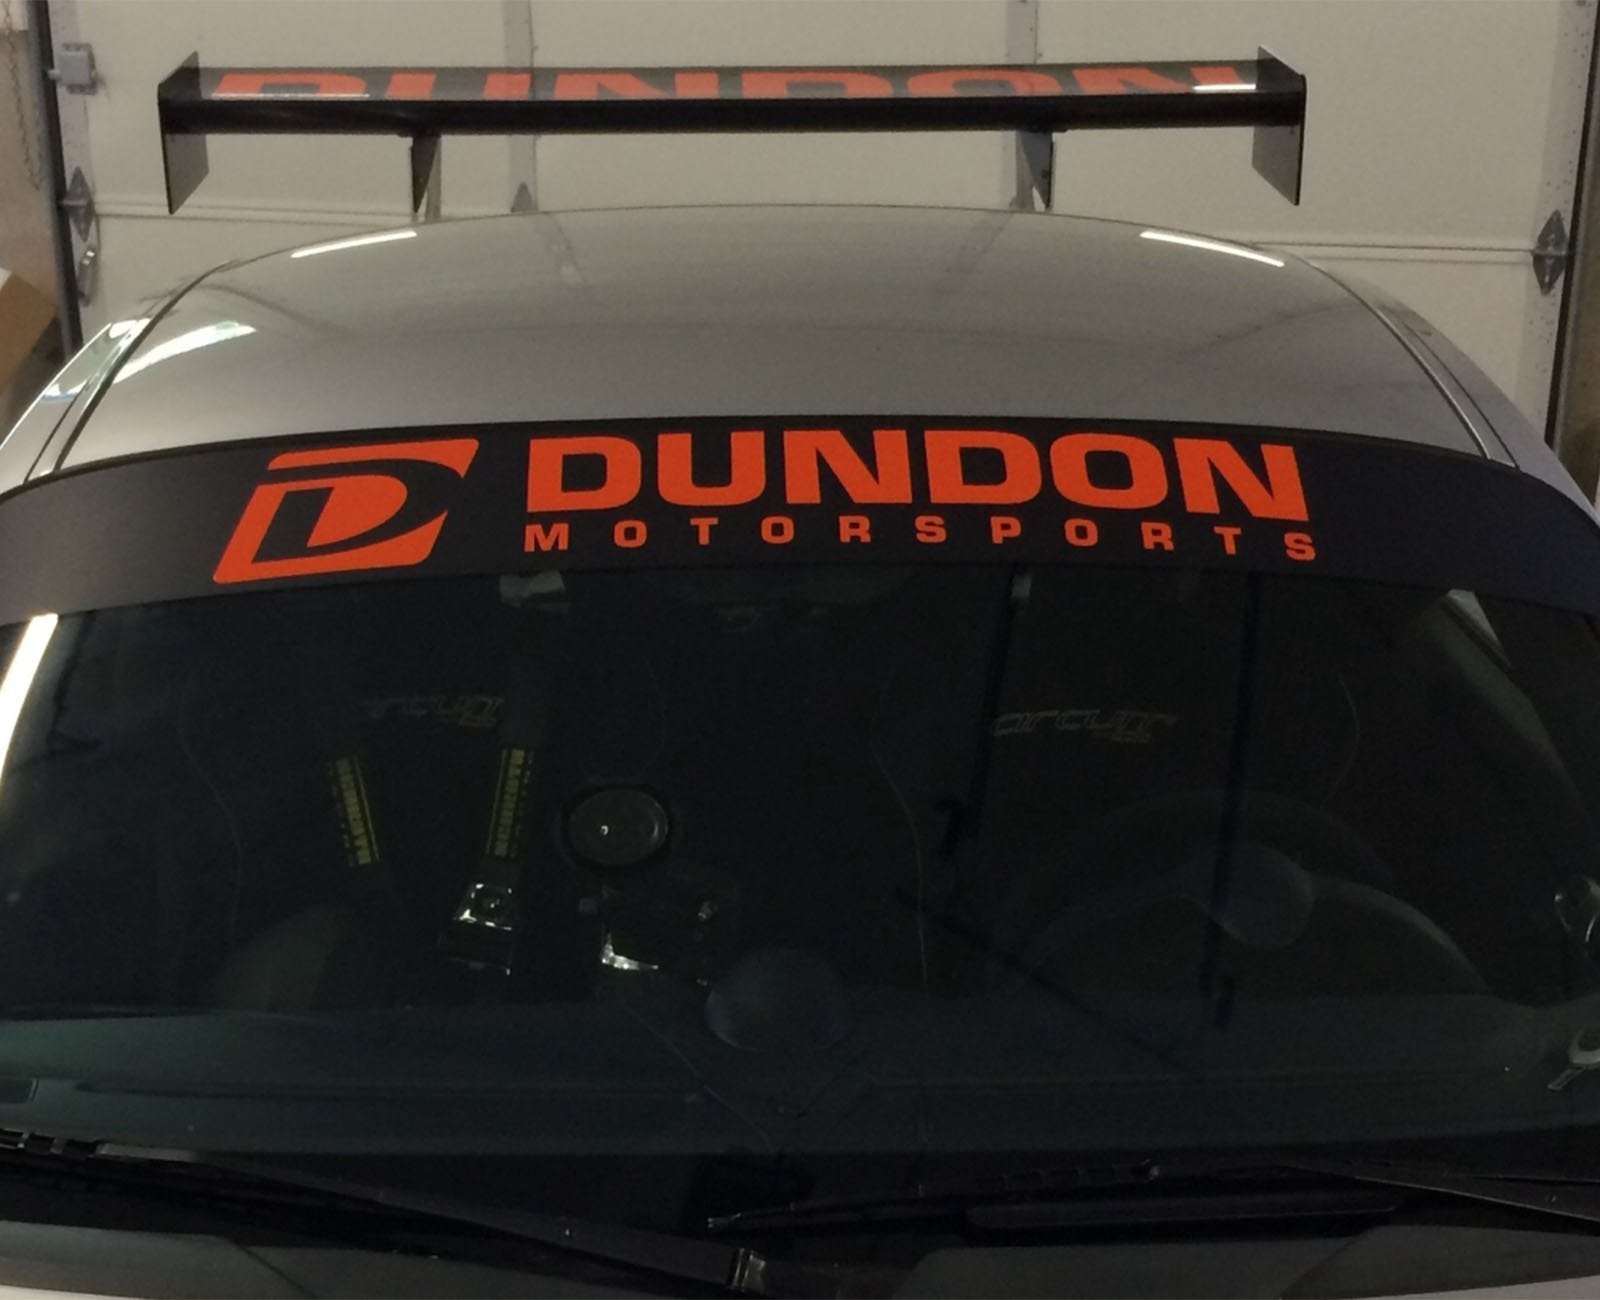 Dundon Windshield Banner - Dundon Motorsports